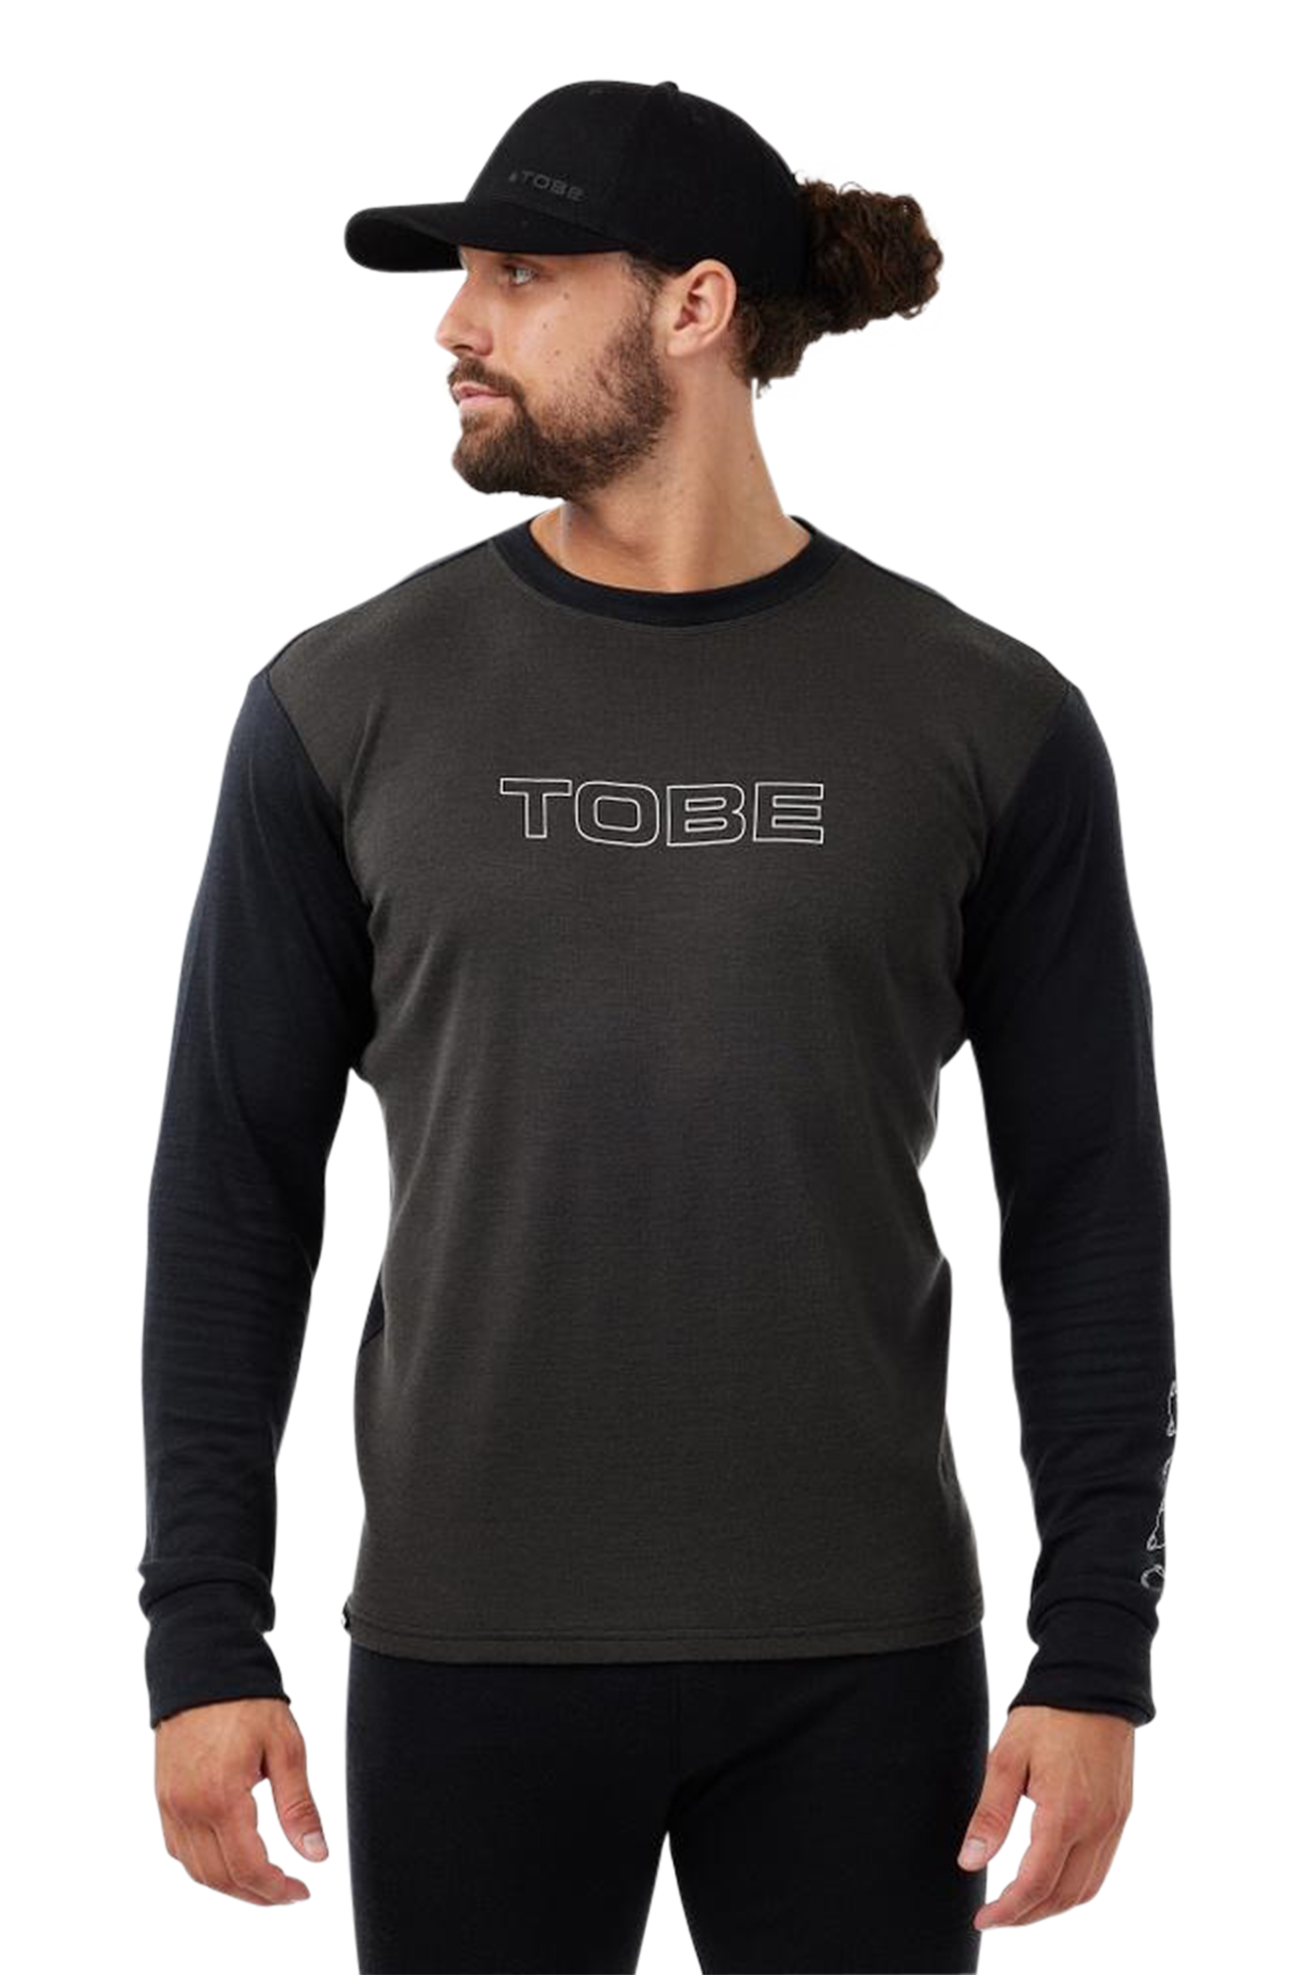 TOBE Outerwear Camiseta Capa Base TOBE Ferox Merino Jet Negra